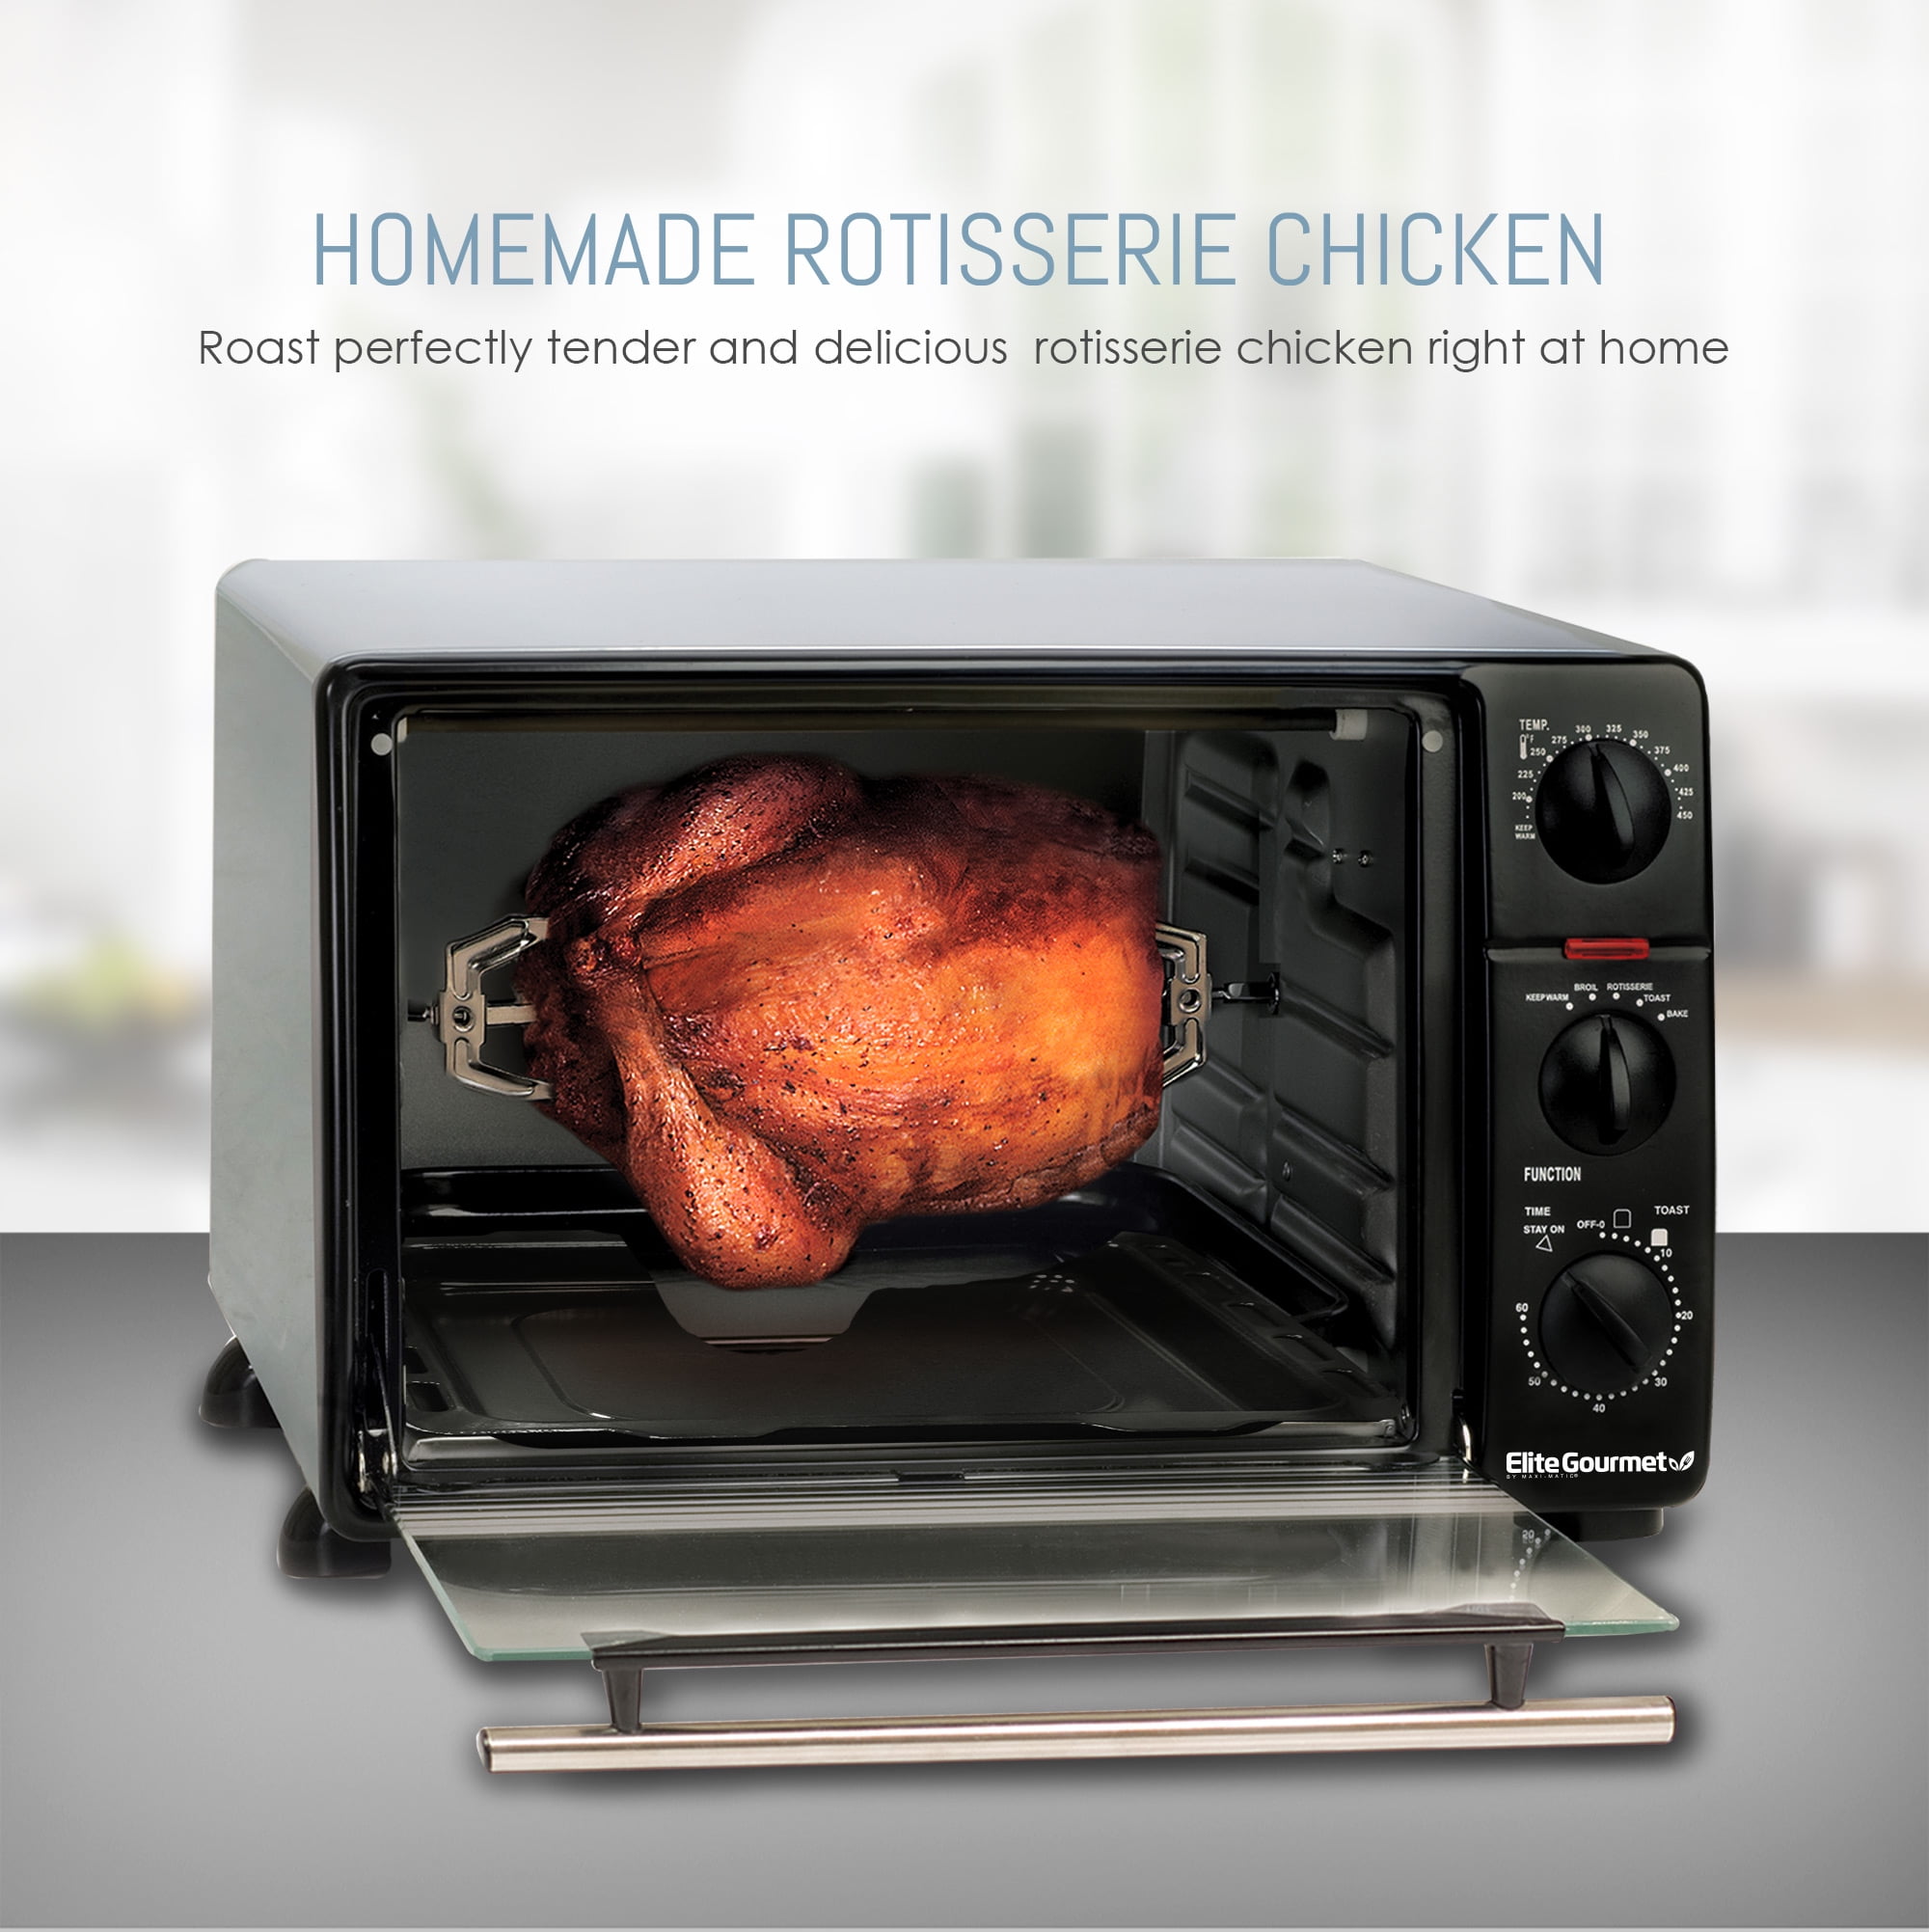 Elite Cuisine ERO-2008S Pro 23 Liter Toaster Oven w/Rotisserie & Grill/Griddle